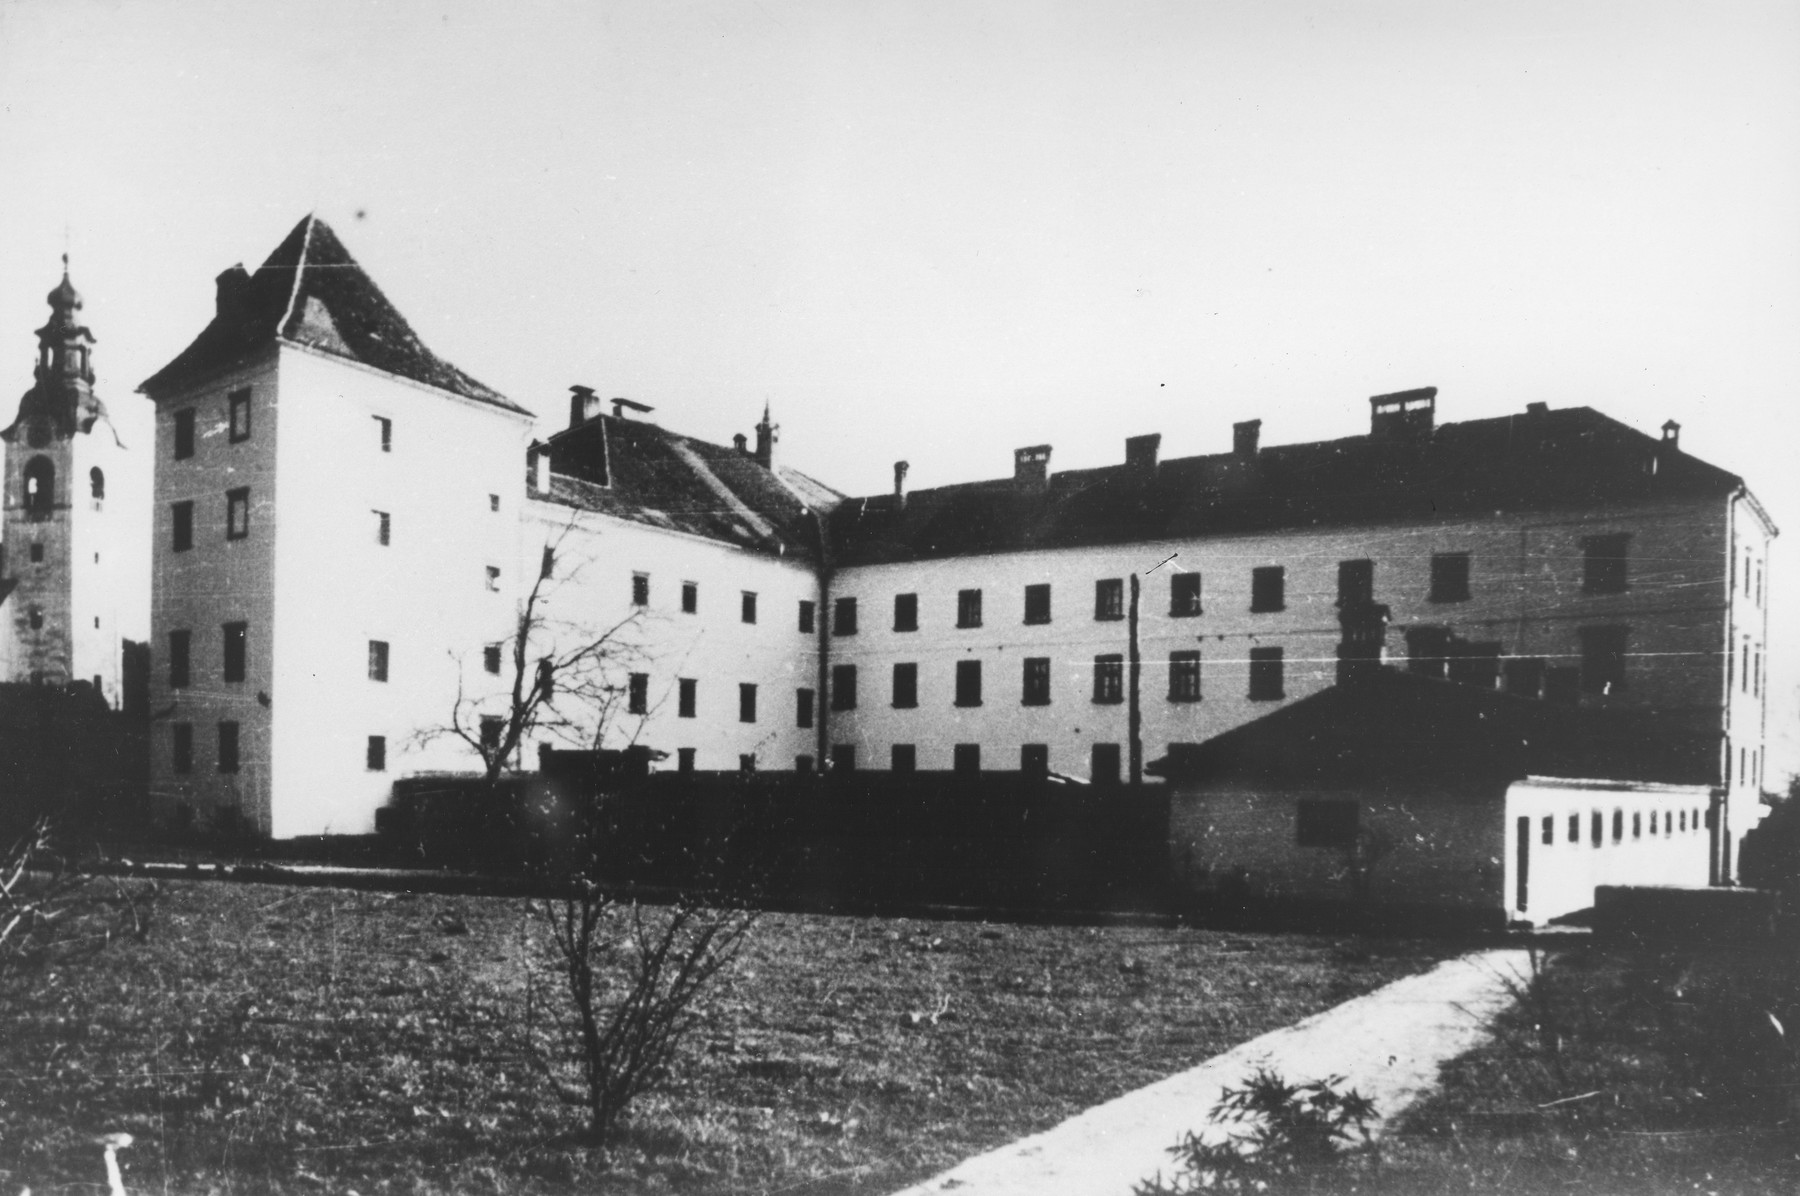 View of a prison in Begunje, Slovenia.